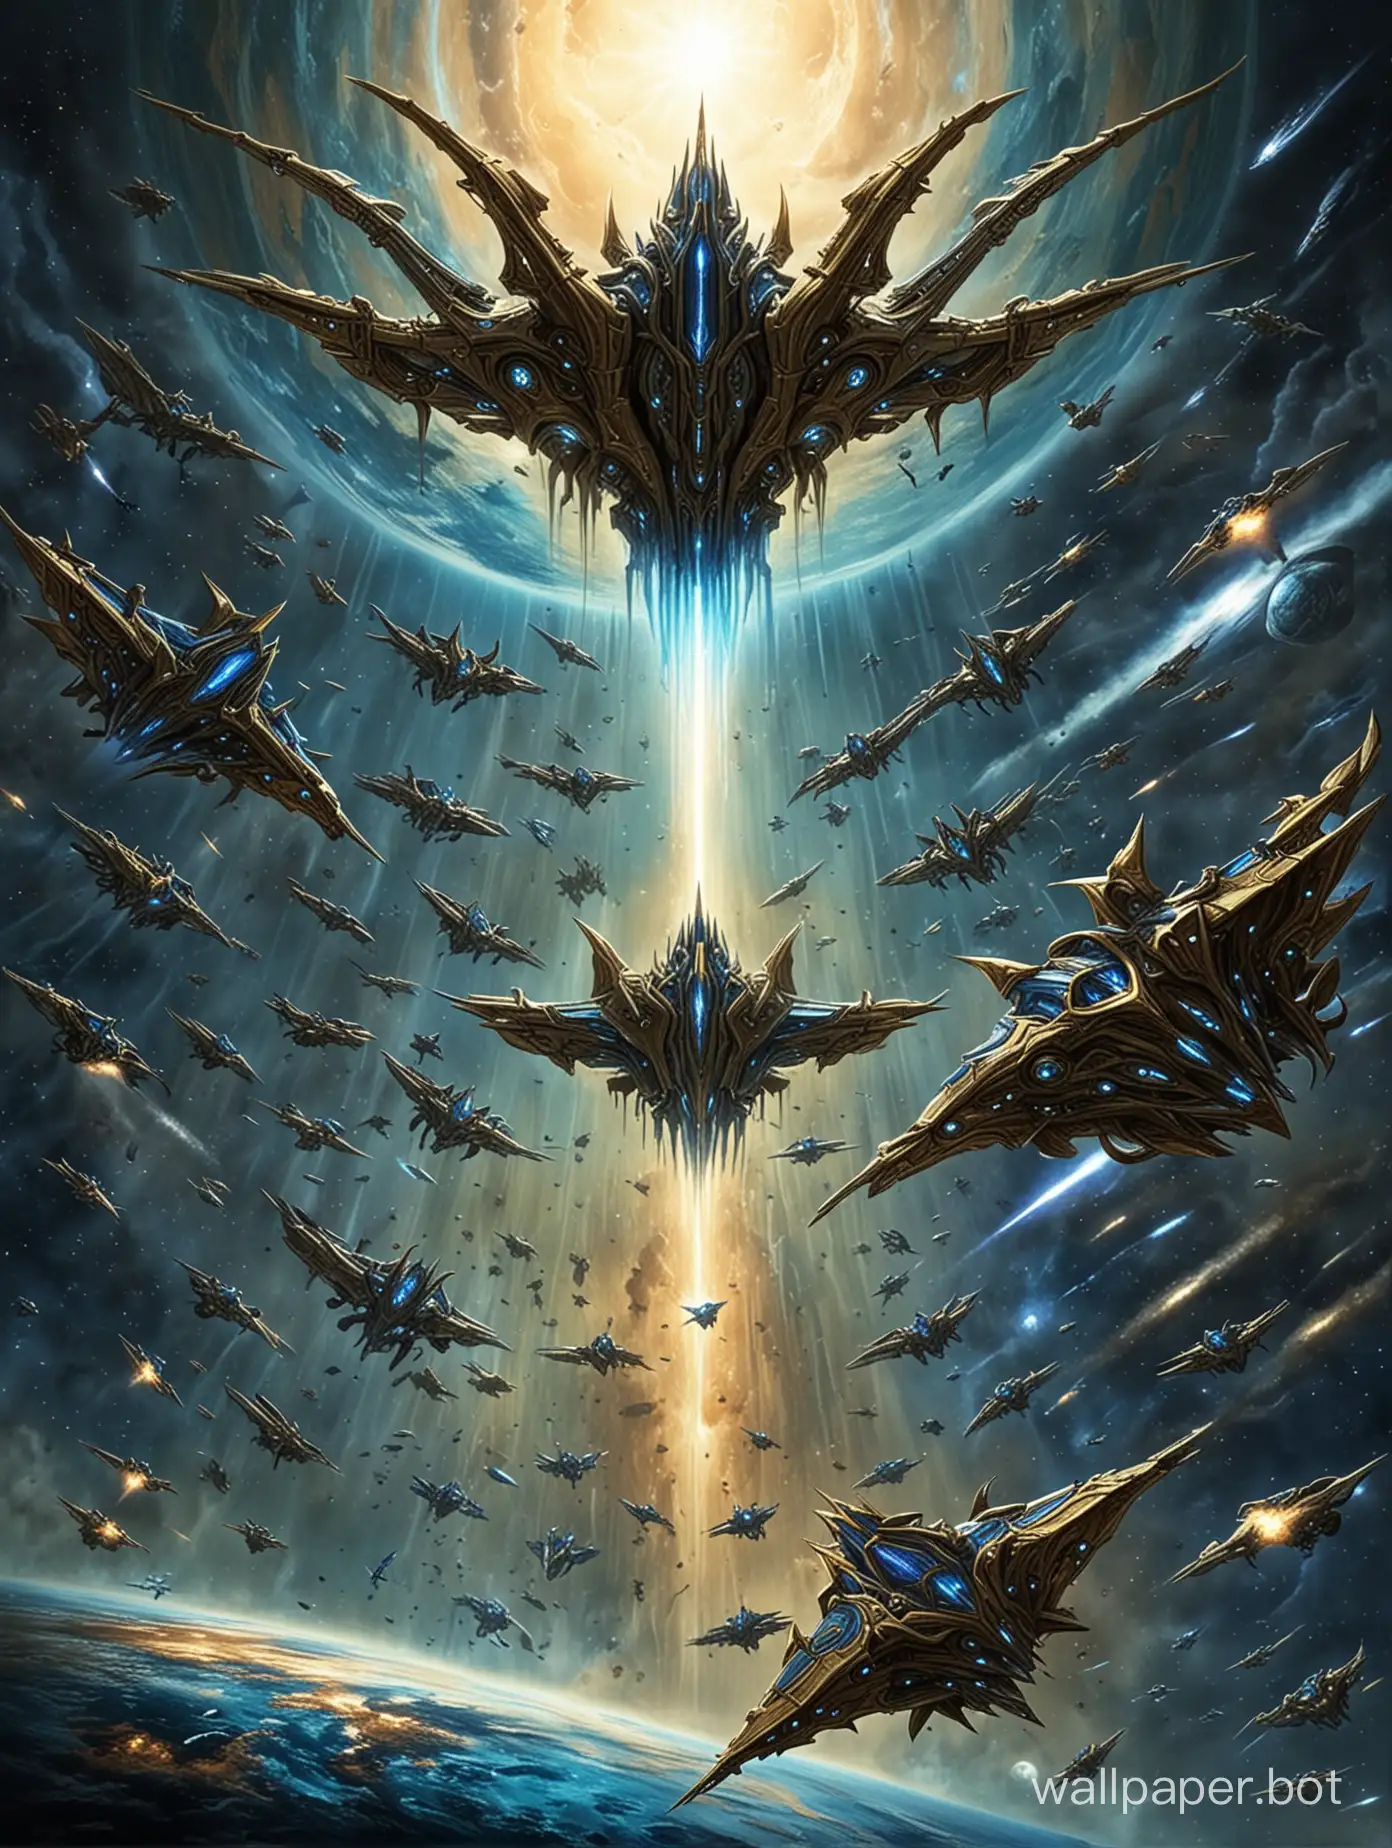 Protoss-Armada-Invading-Earth-SciFi-Extraterrestrial-Fleet-Descending-Upon-Planet